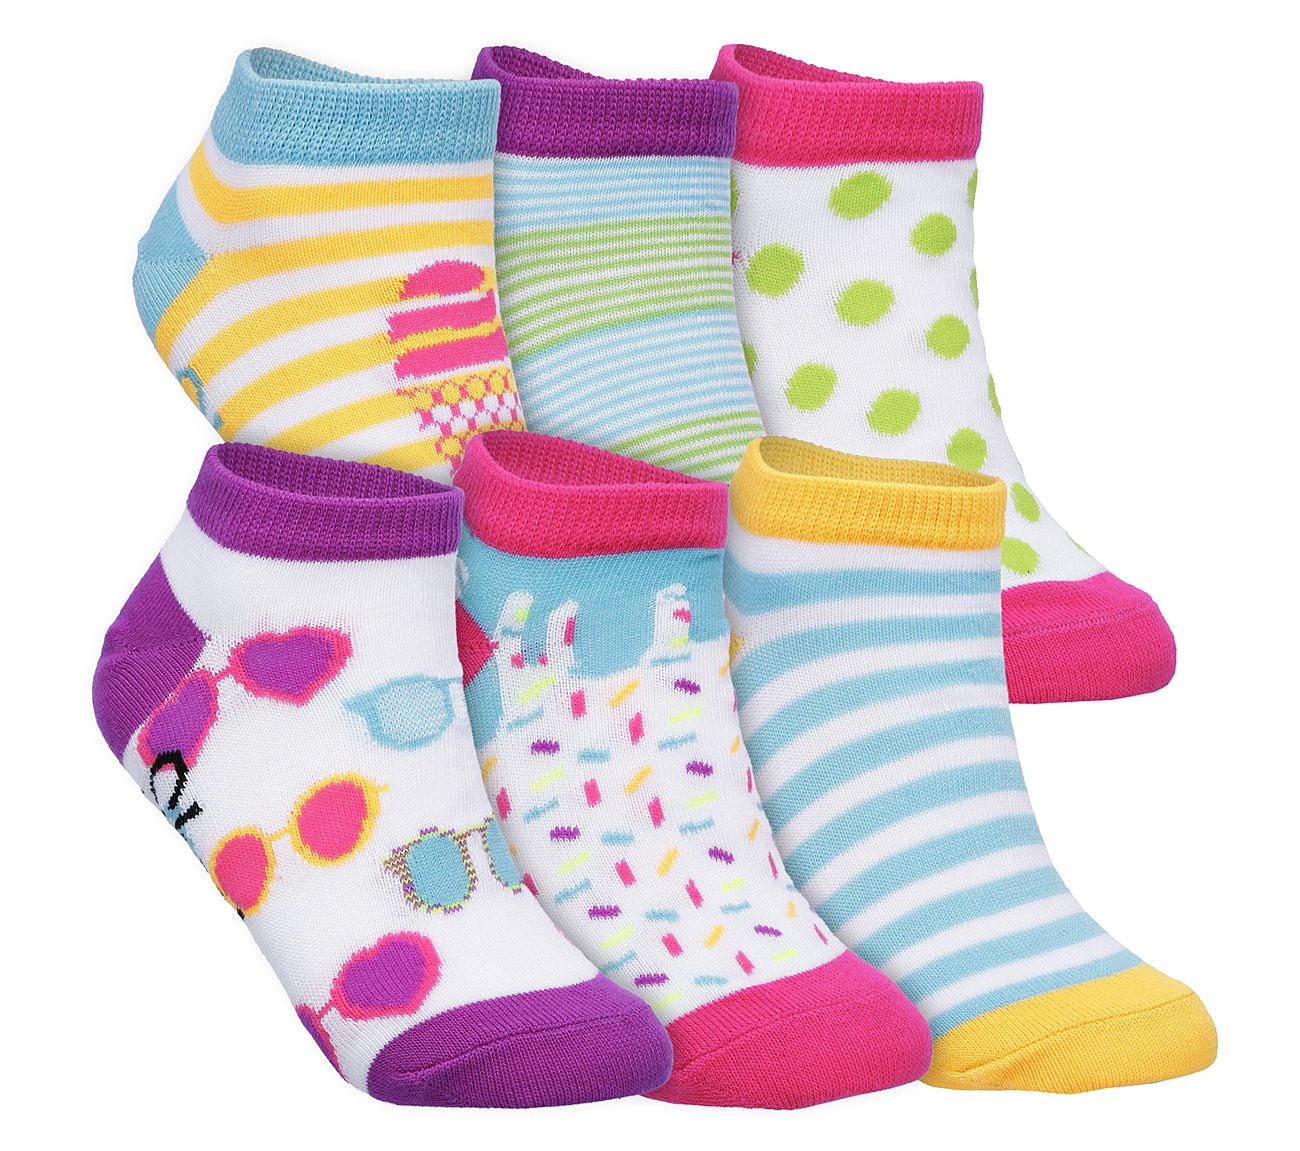 Buy SKECHERS 6 Pack Low Cut Fashion Print Socks Socks Shoes only $10.00